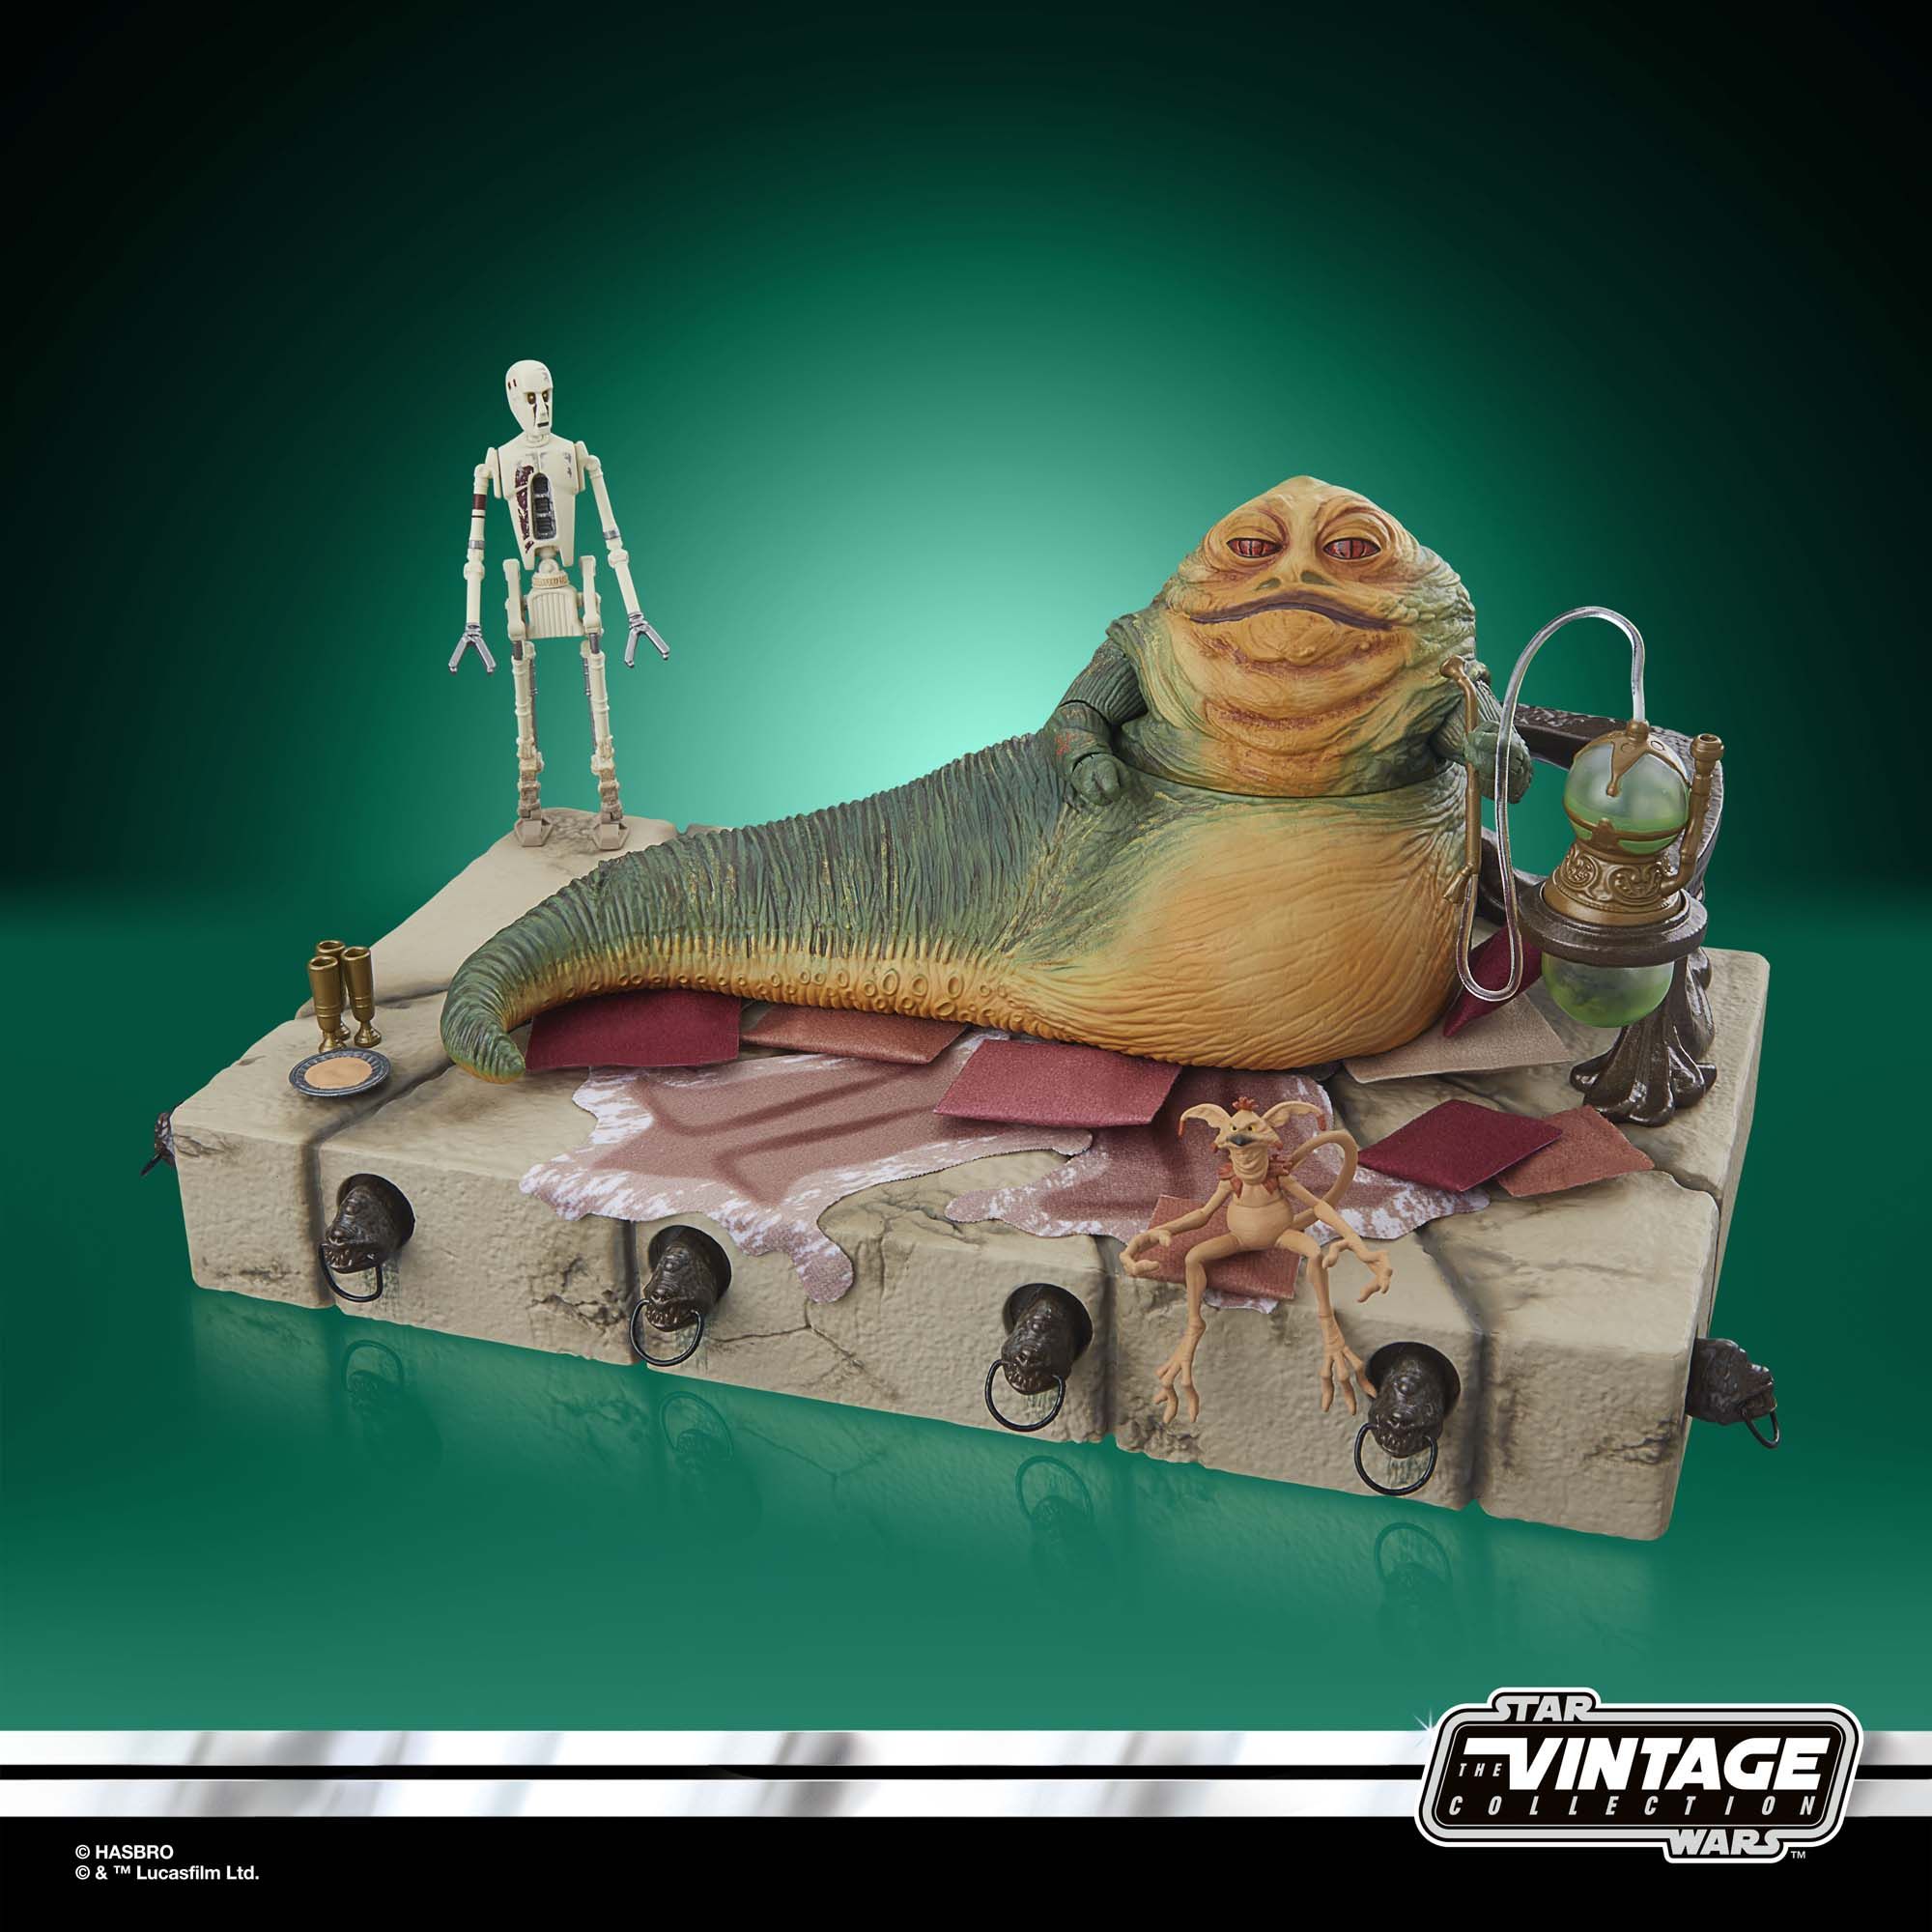 Star Wars Vintage Collection: Jabba the Hutt set revealed